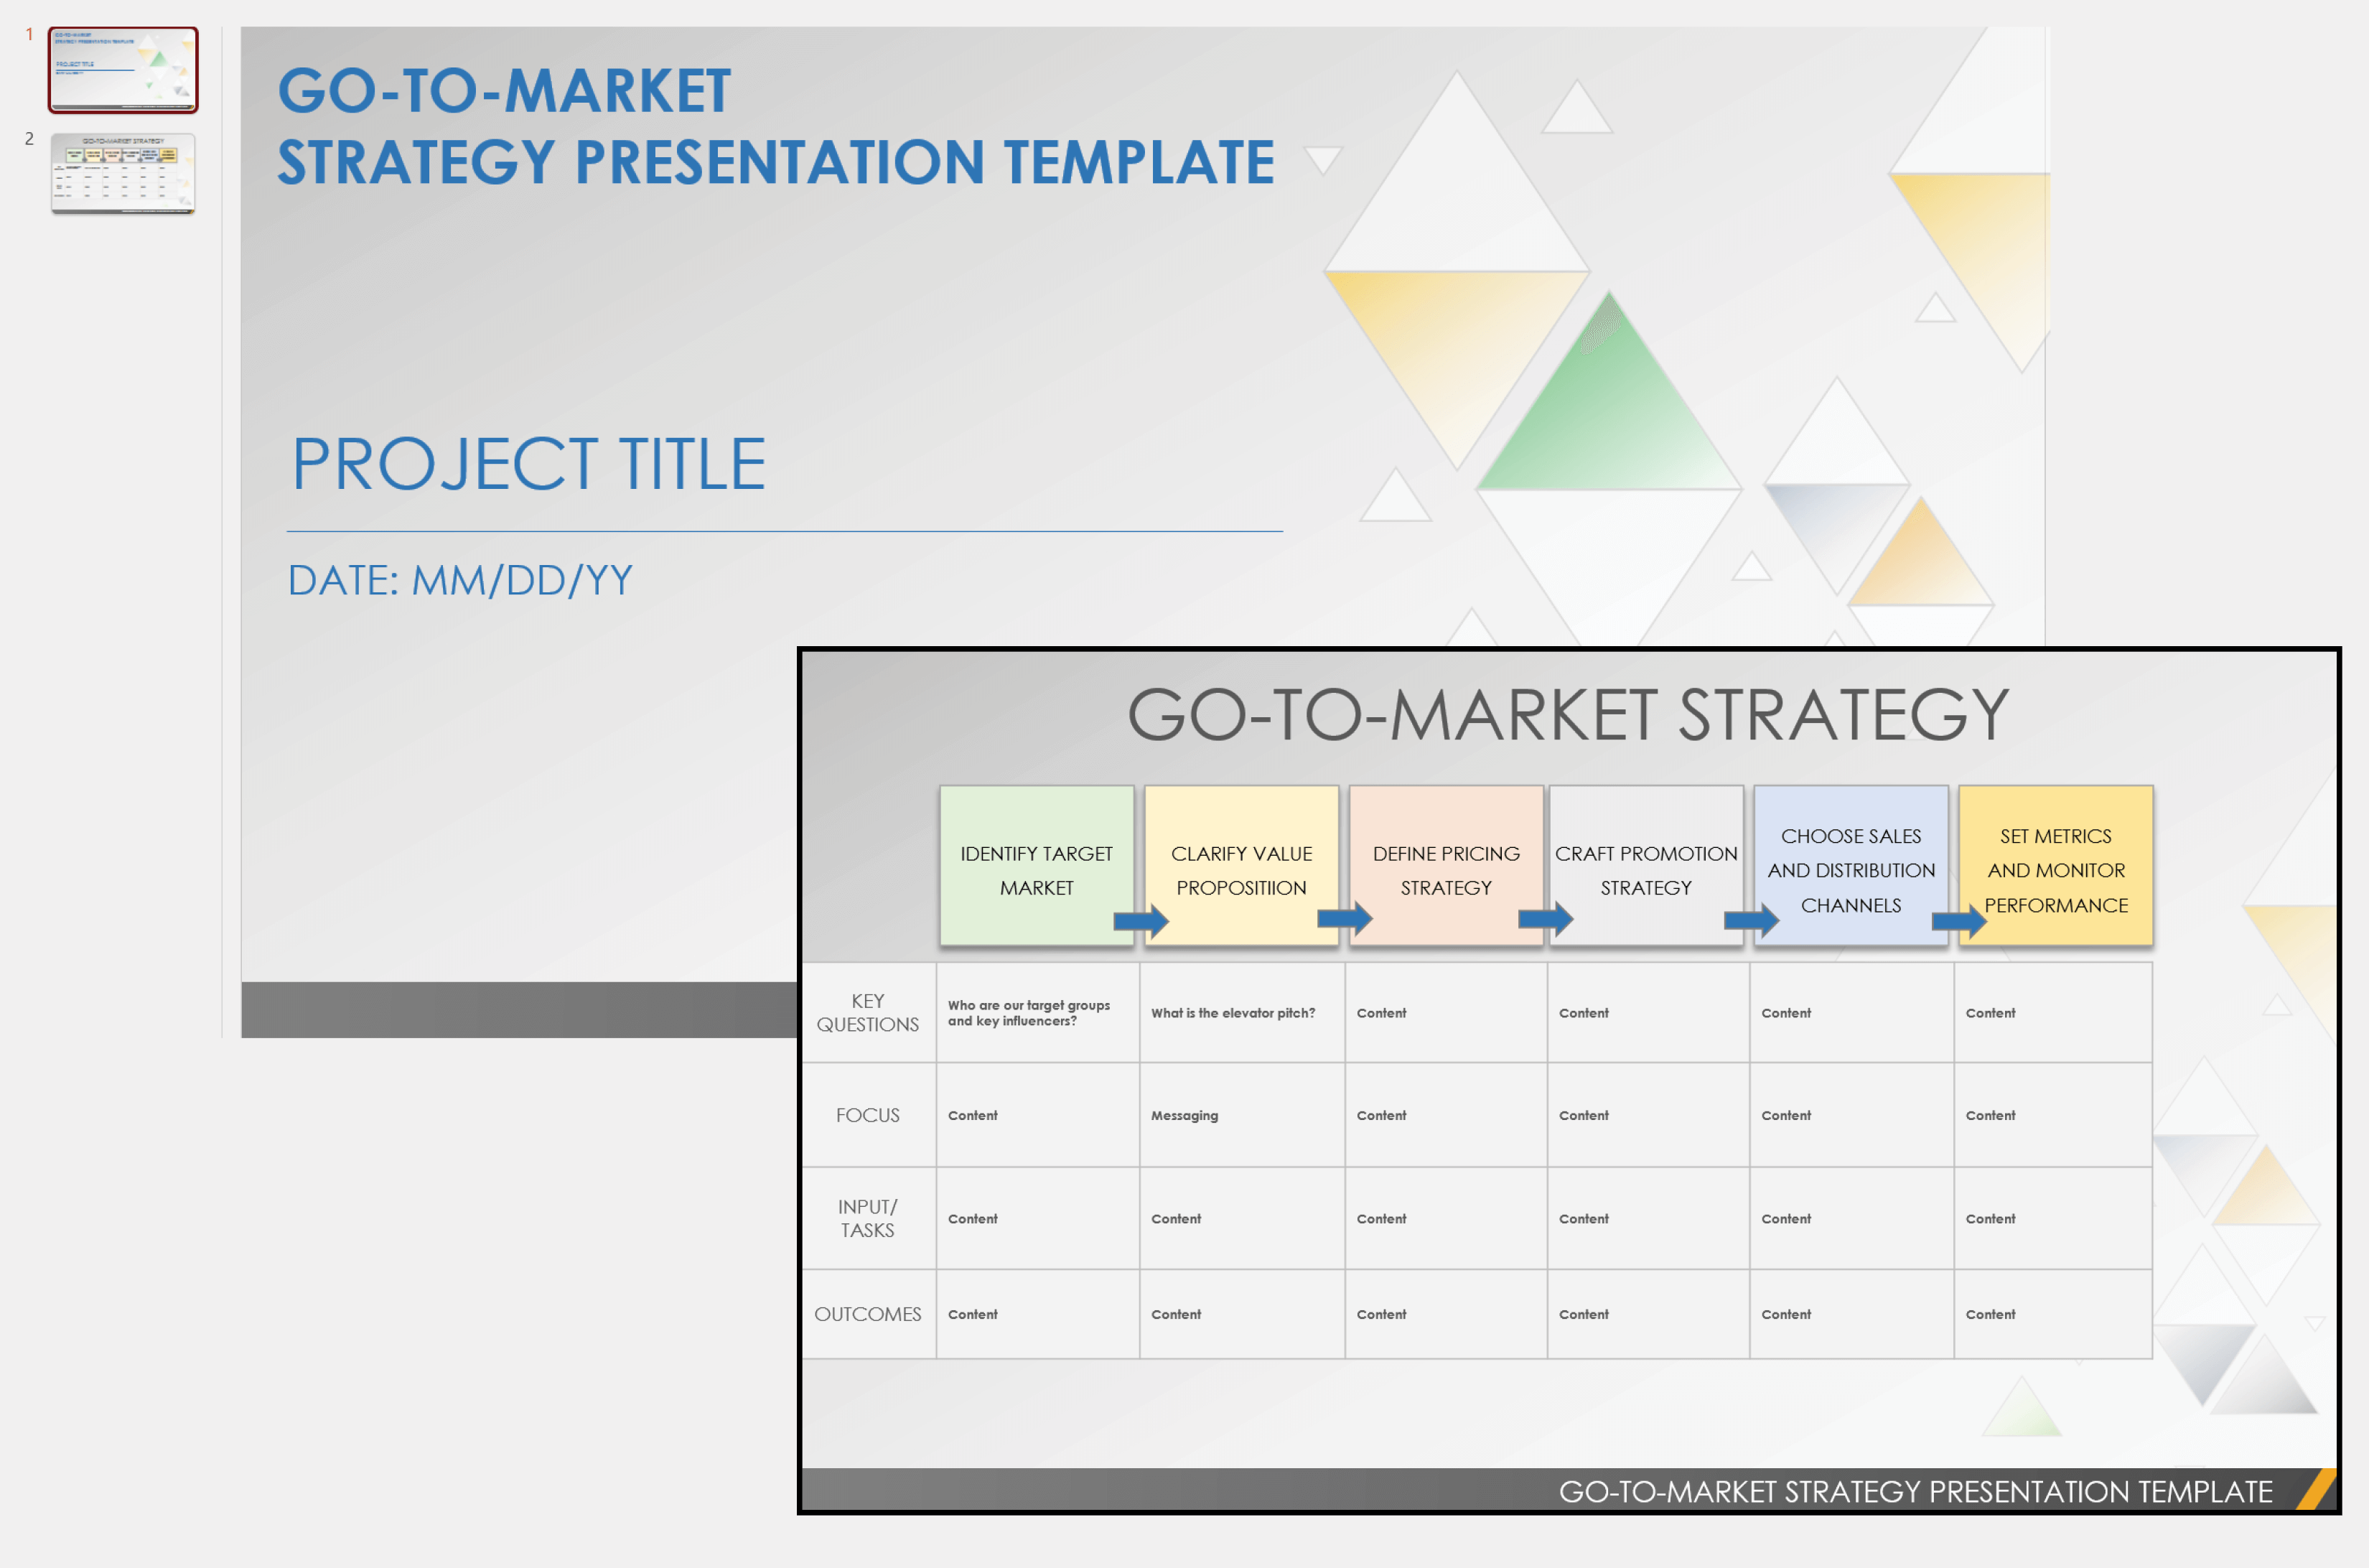 Go-To-Market Strategy Presentation Template